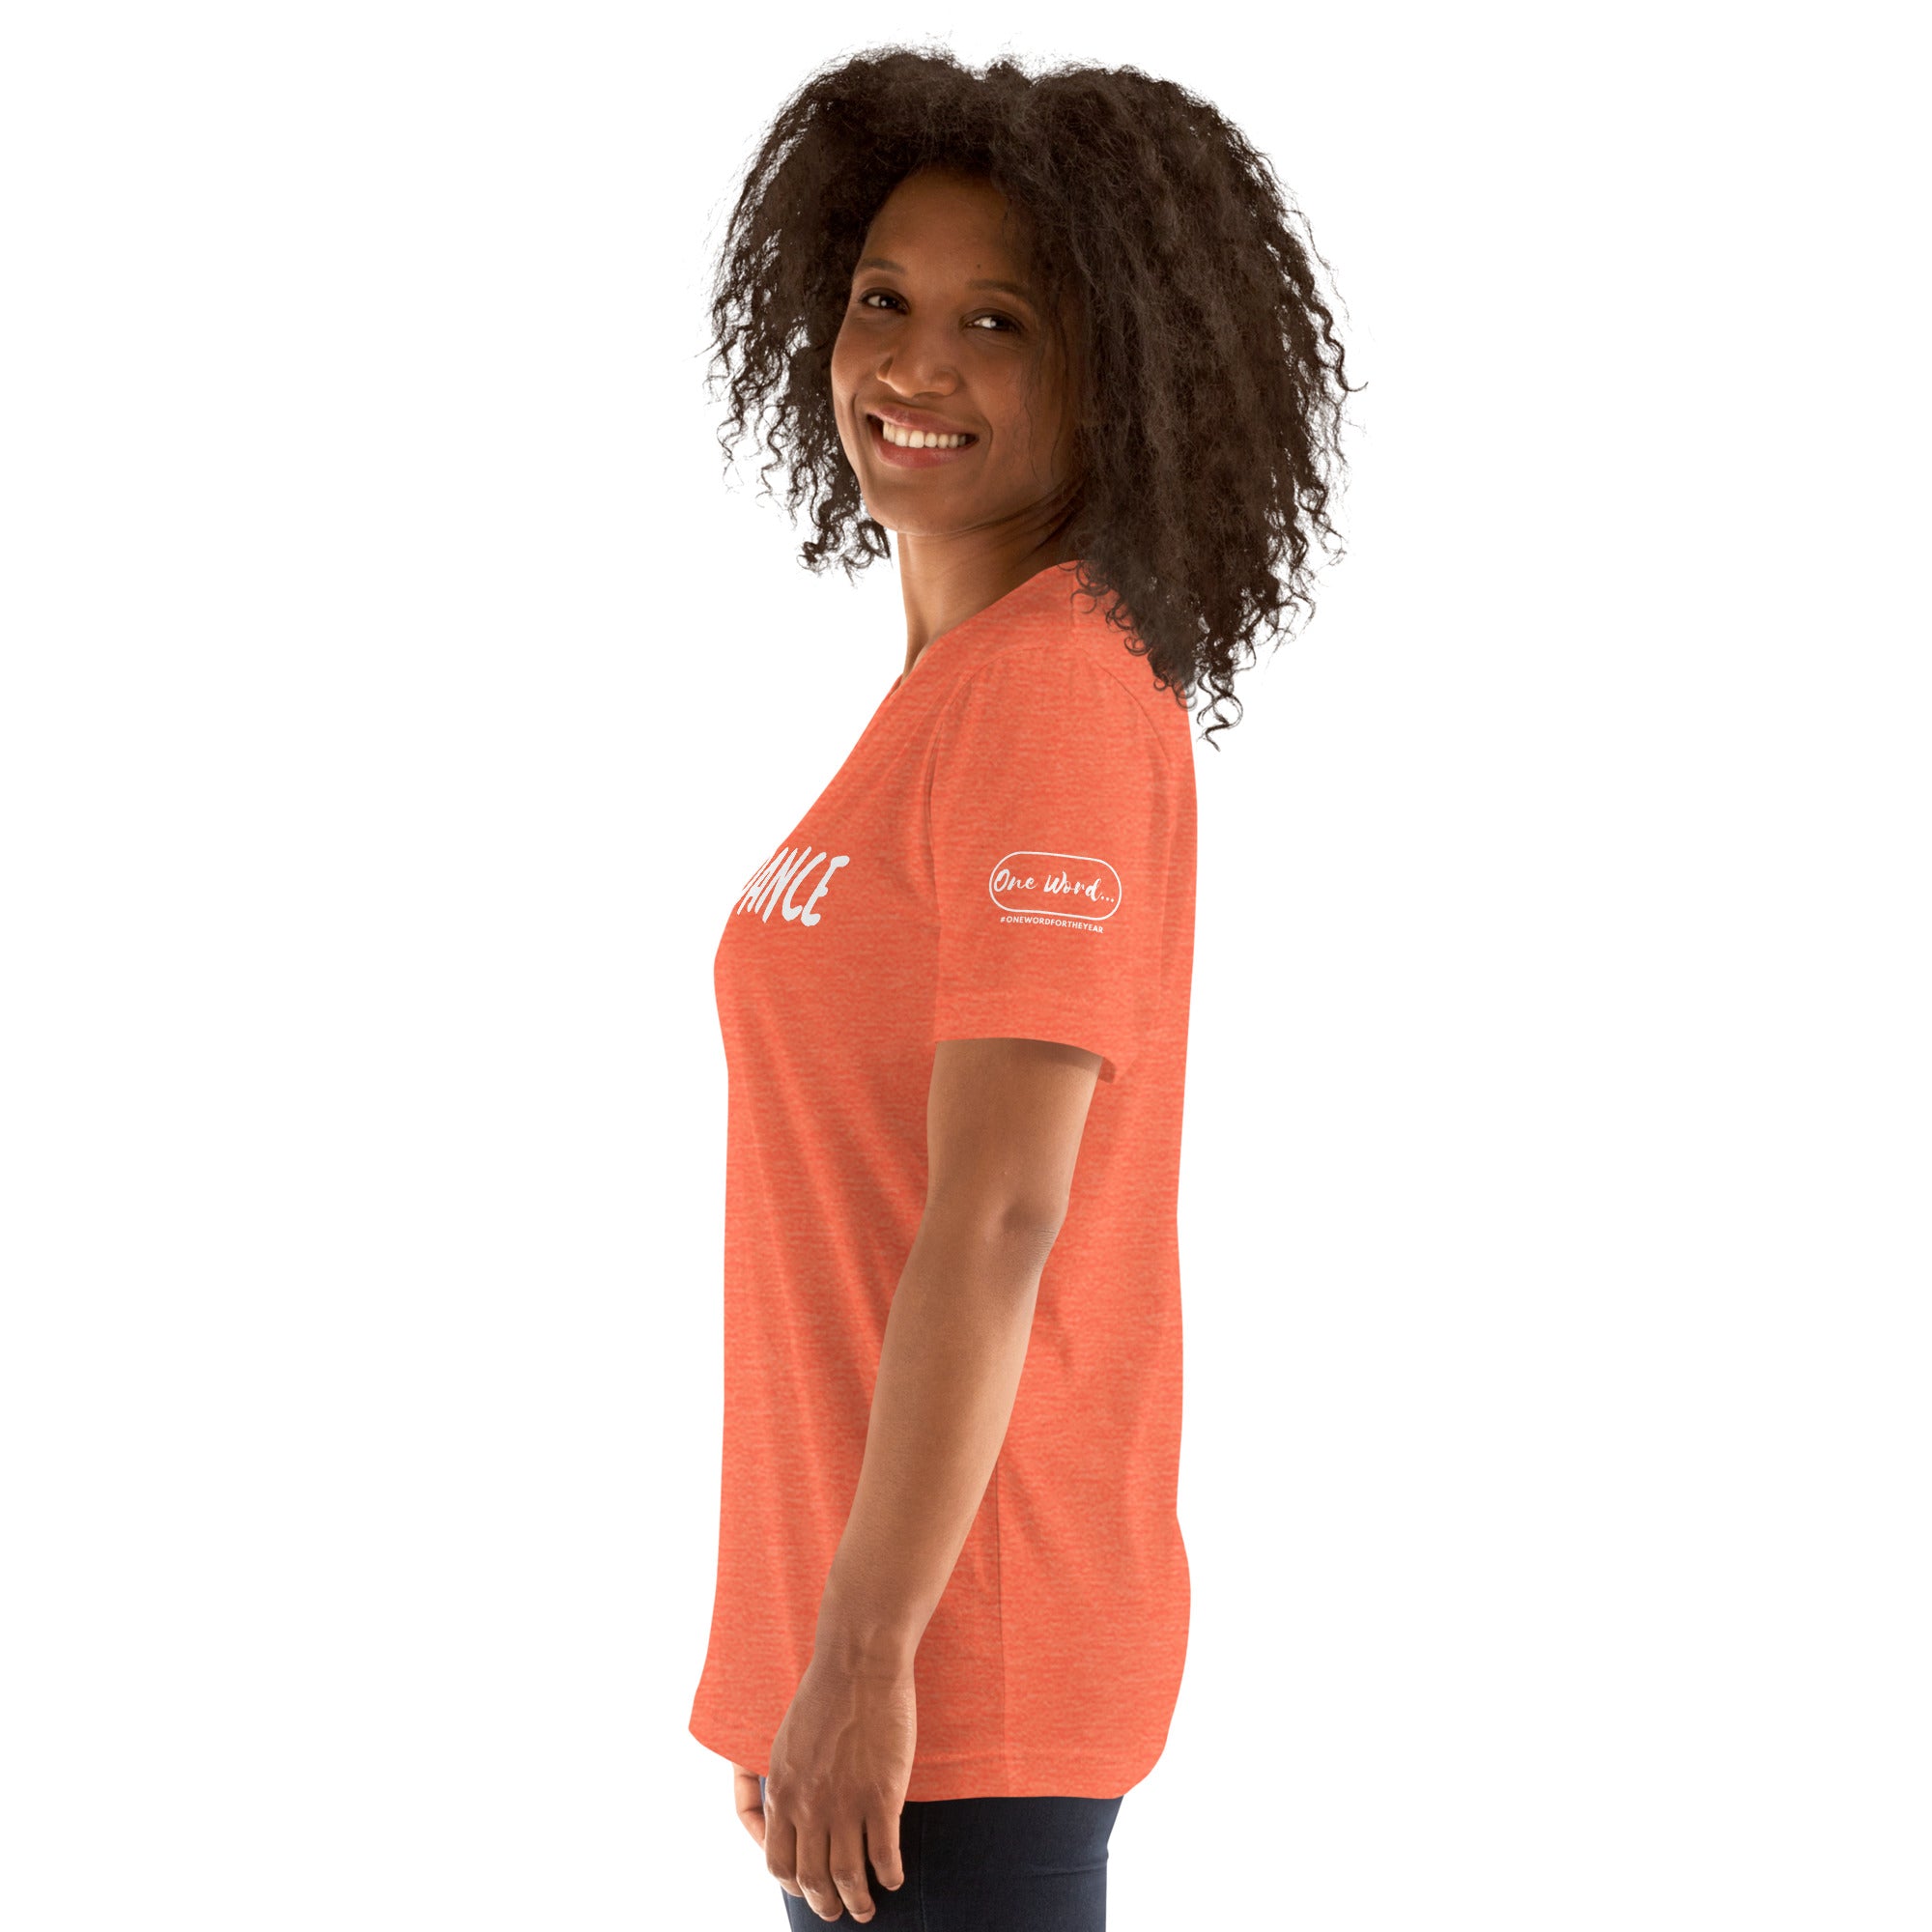 Abundance-Inspired T-shirt | Faith Apparel | One-Word Unisex T-shirt